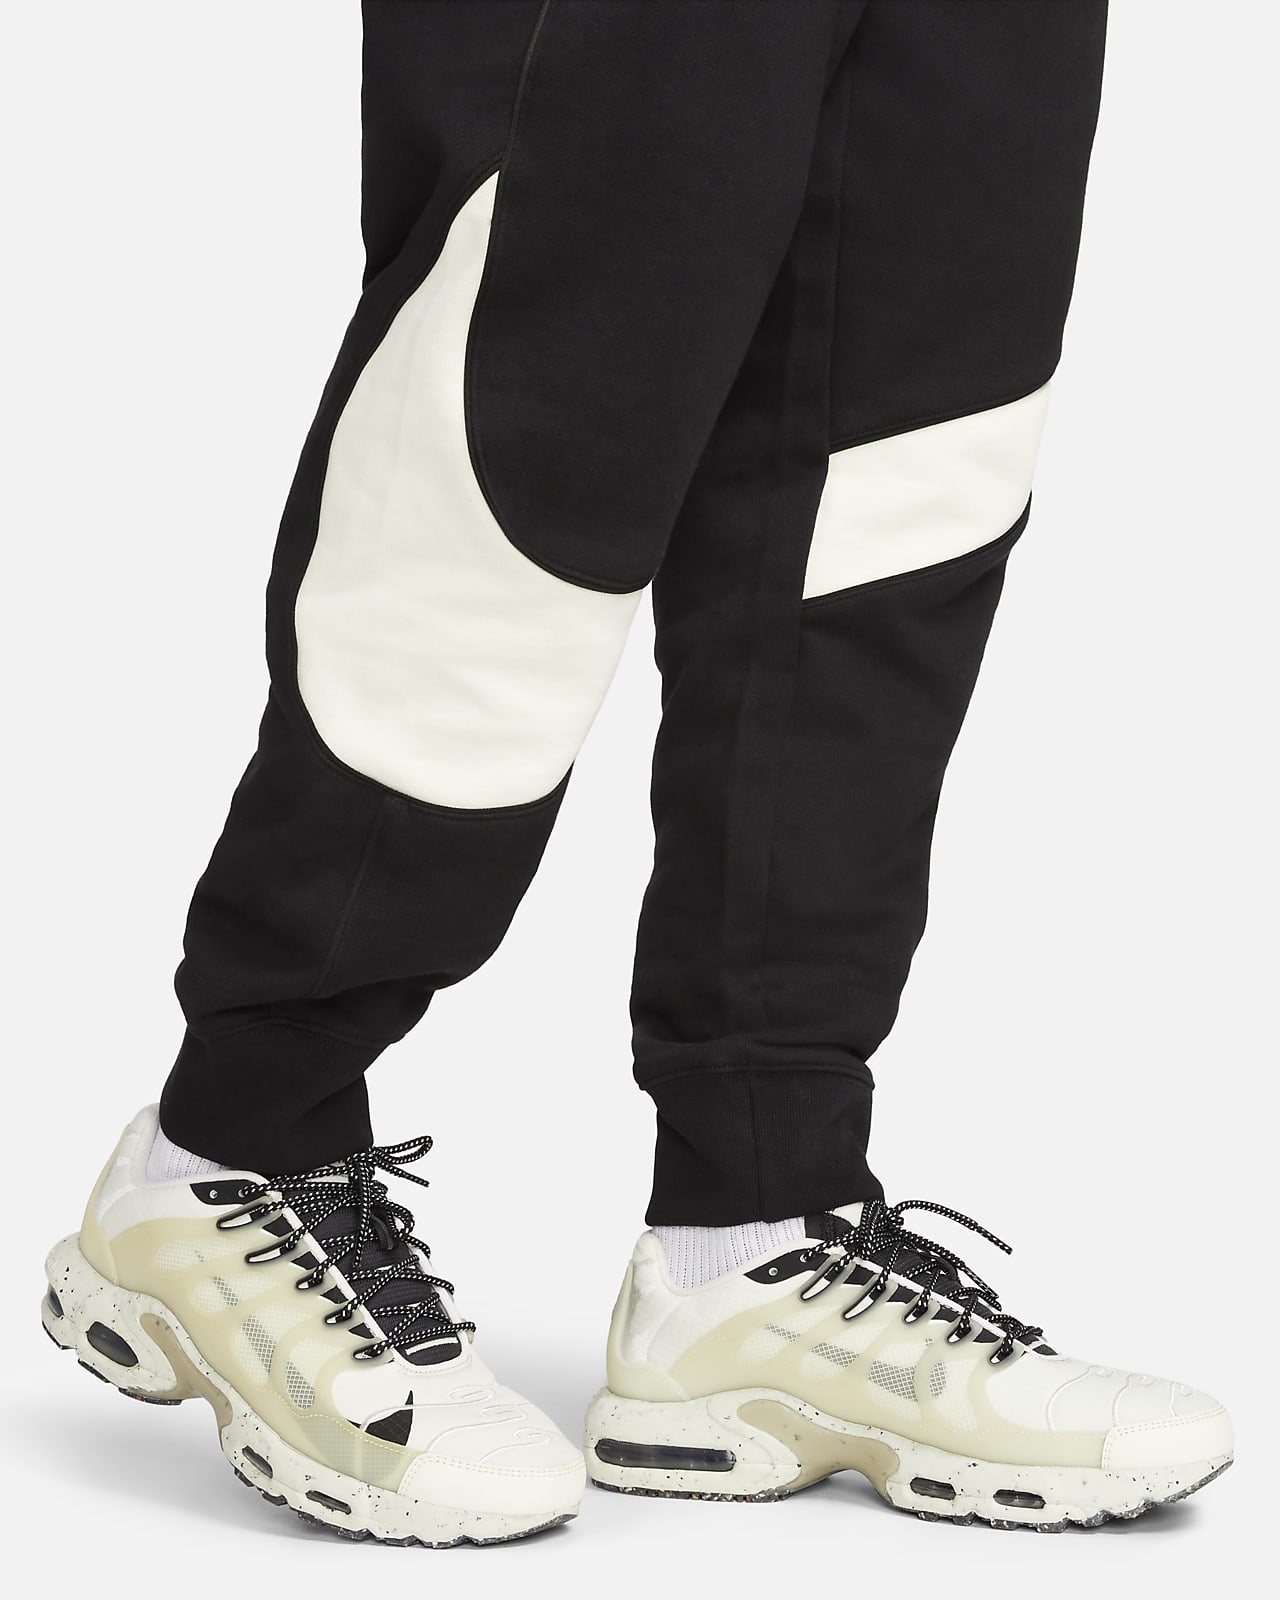 Nike Double Swoosh Track Pant - Comfortable and Stylish